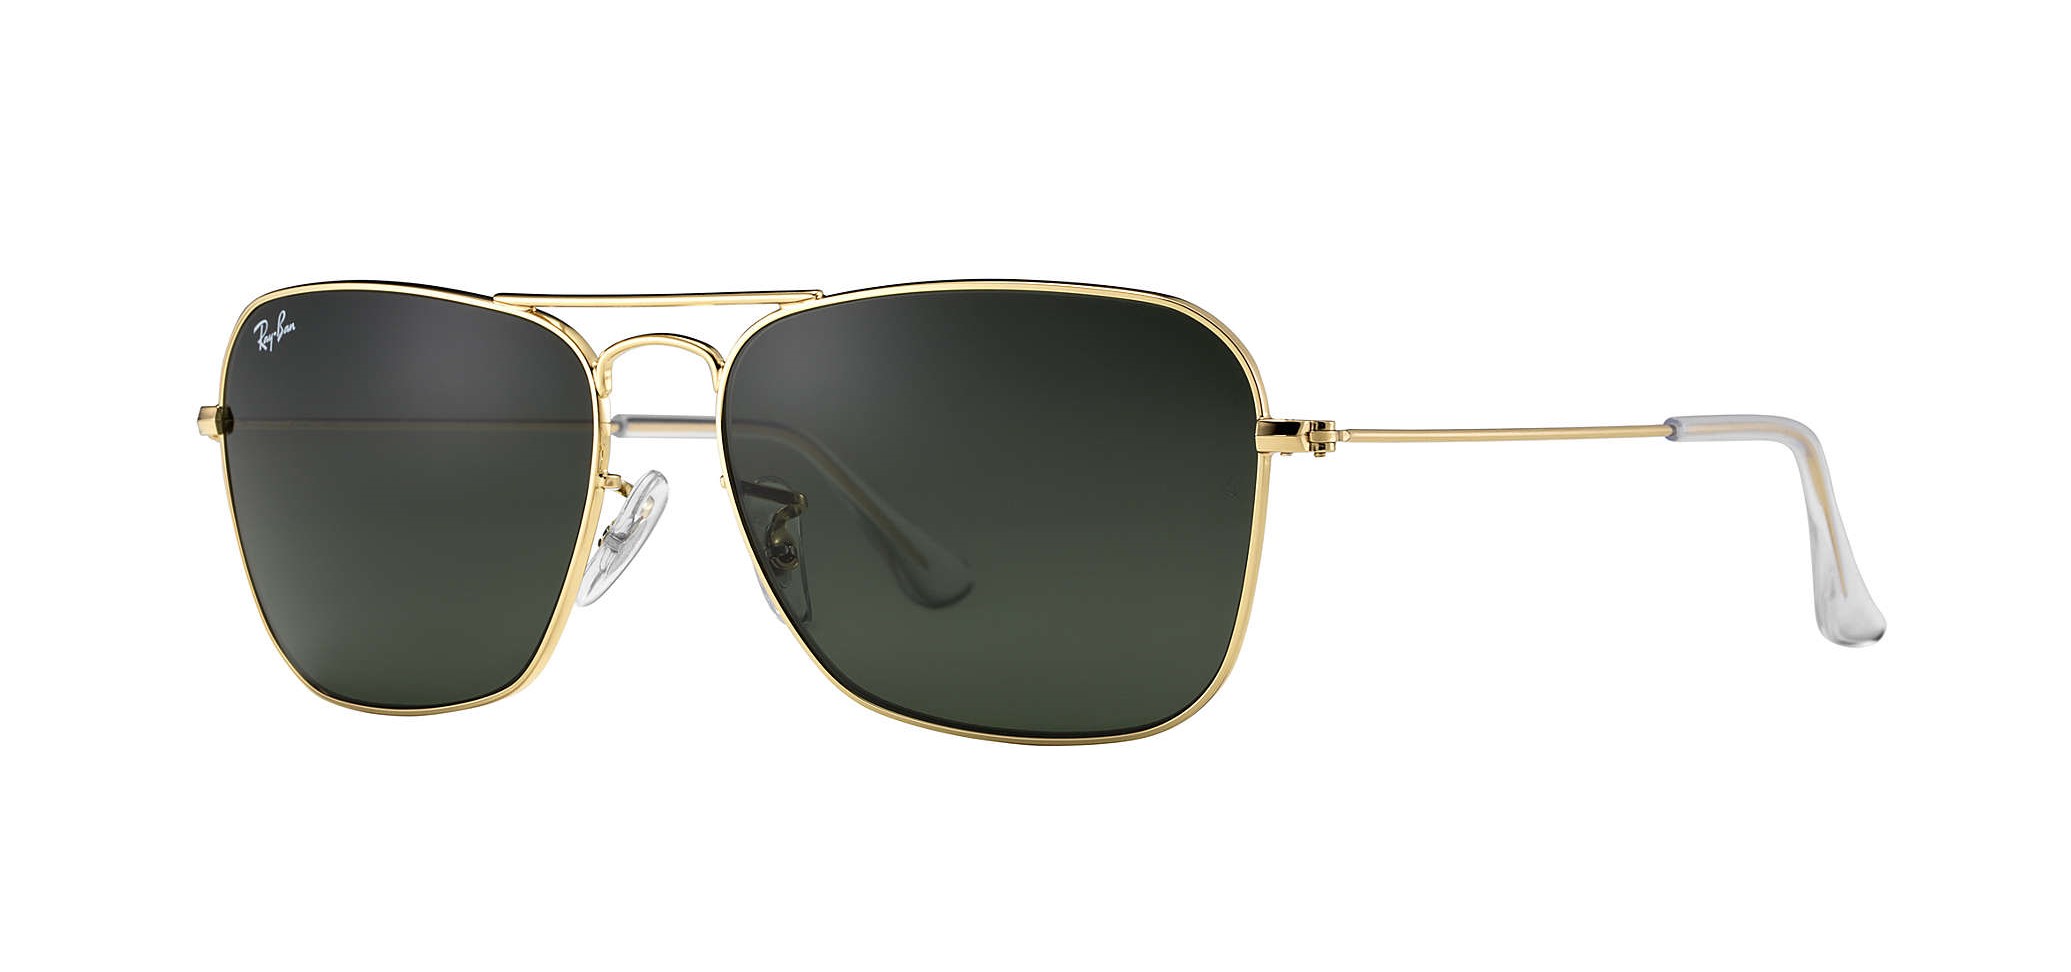 These Are All The Ray-Ban Sunglasses In Top Gun: Maverick | SportRx